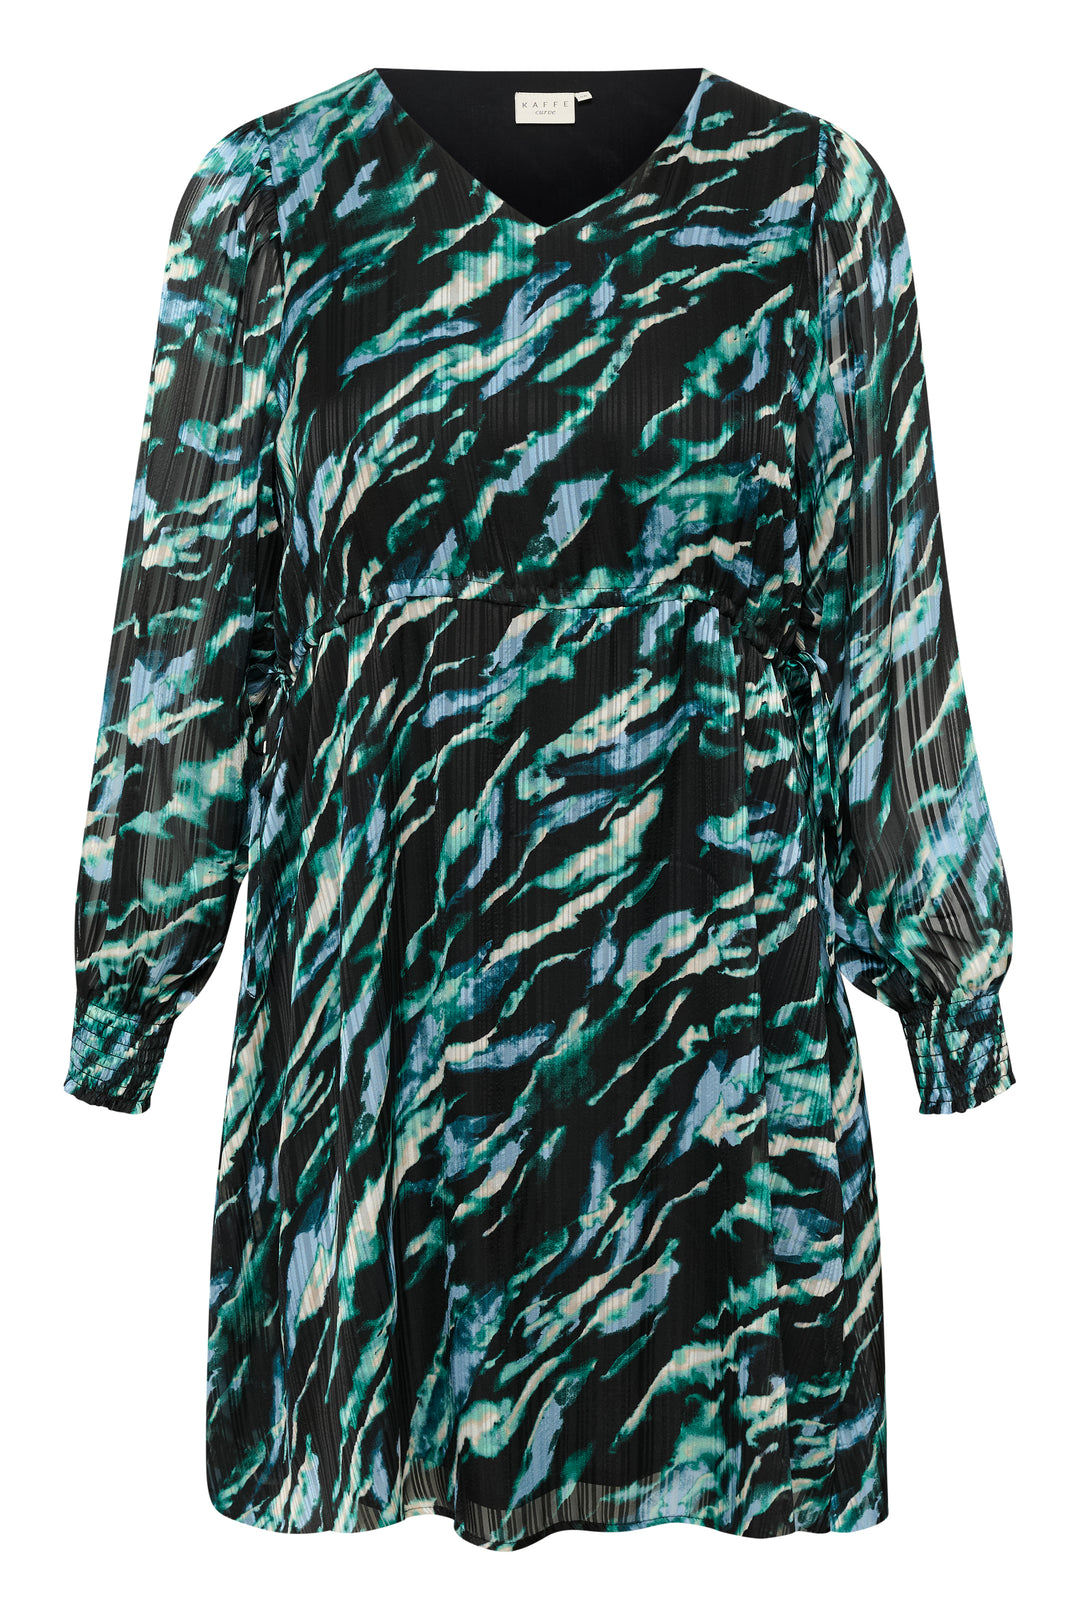 jurk van luchtige voile met leuke print - kaffe curve - - grote maten - dameskleding - kledingwinkel - herent - leuven